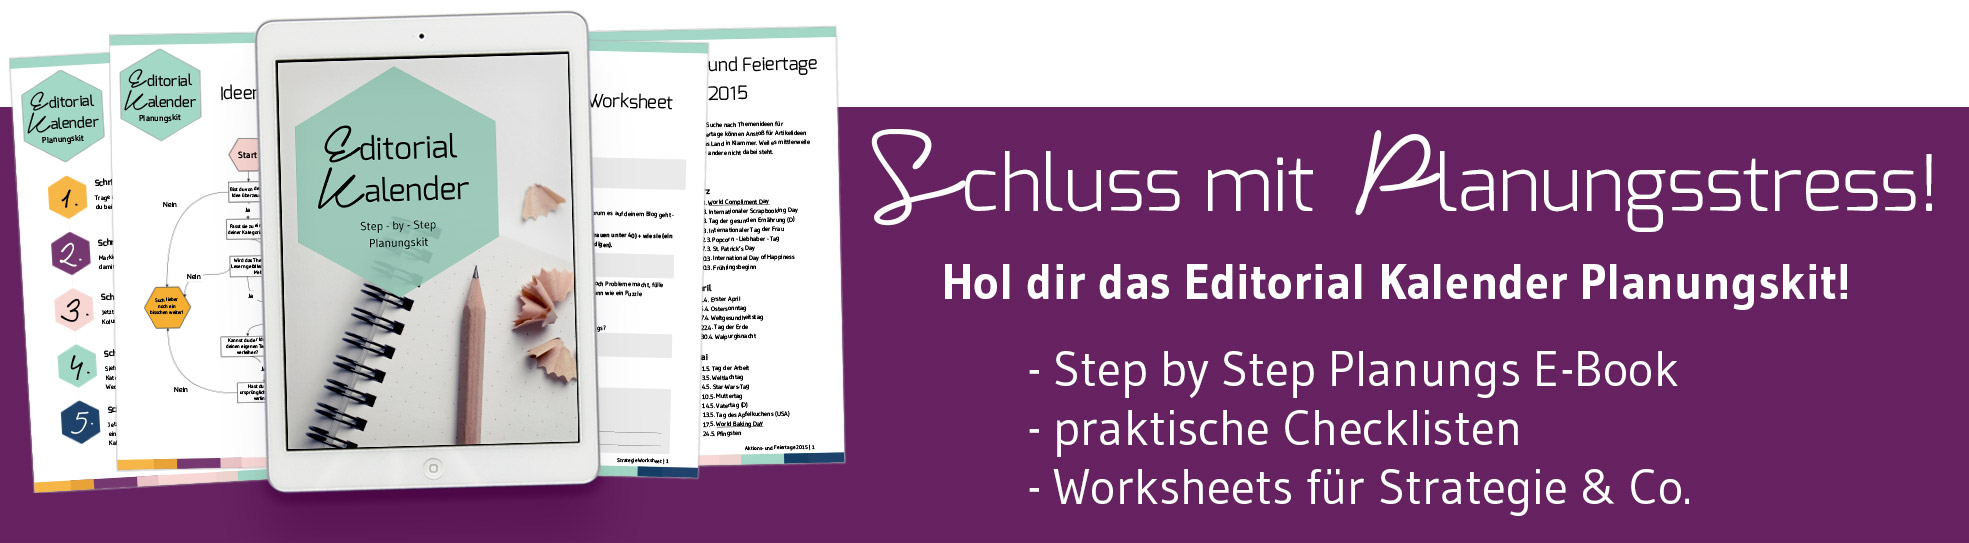 Editorial Kalender Planungskit - Step by Step E-Book